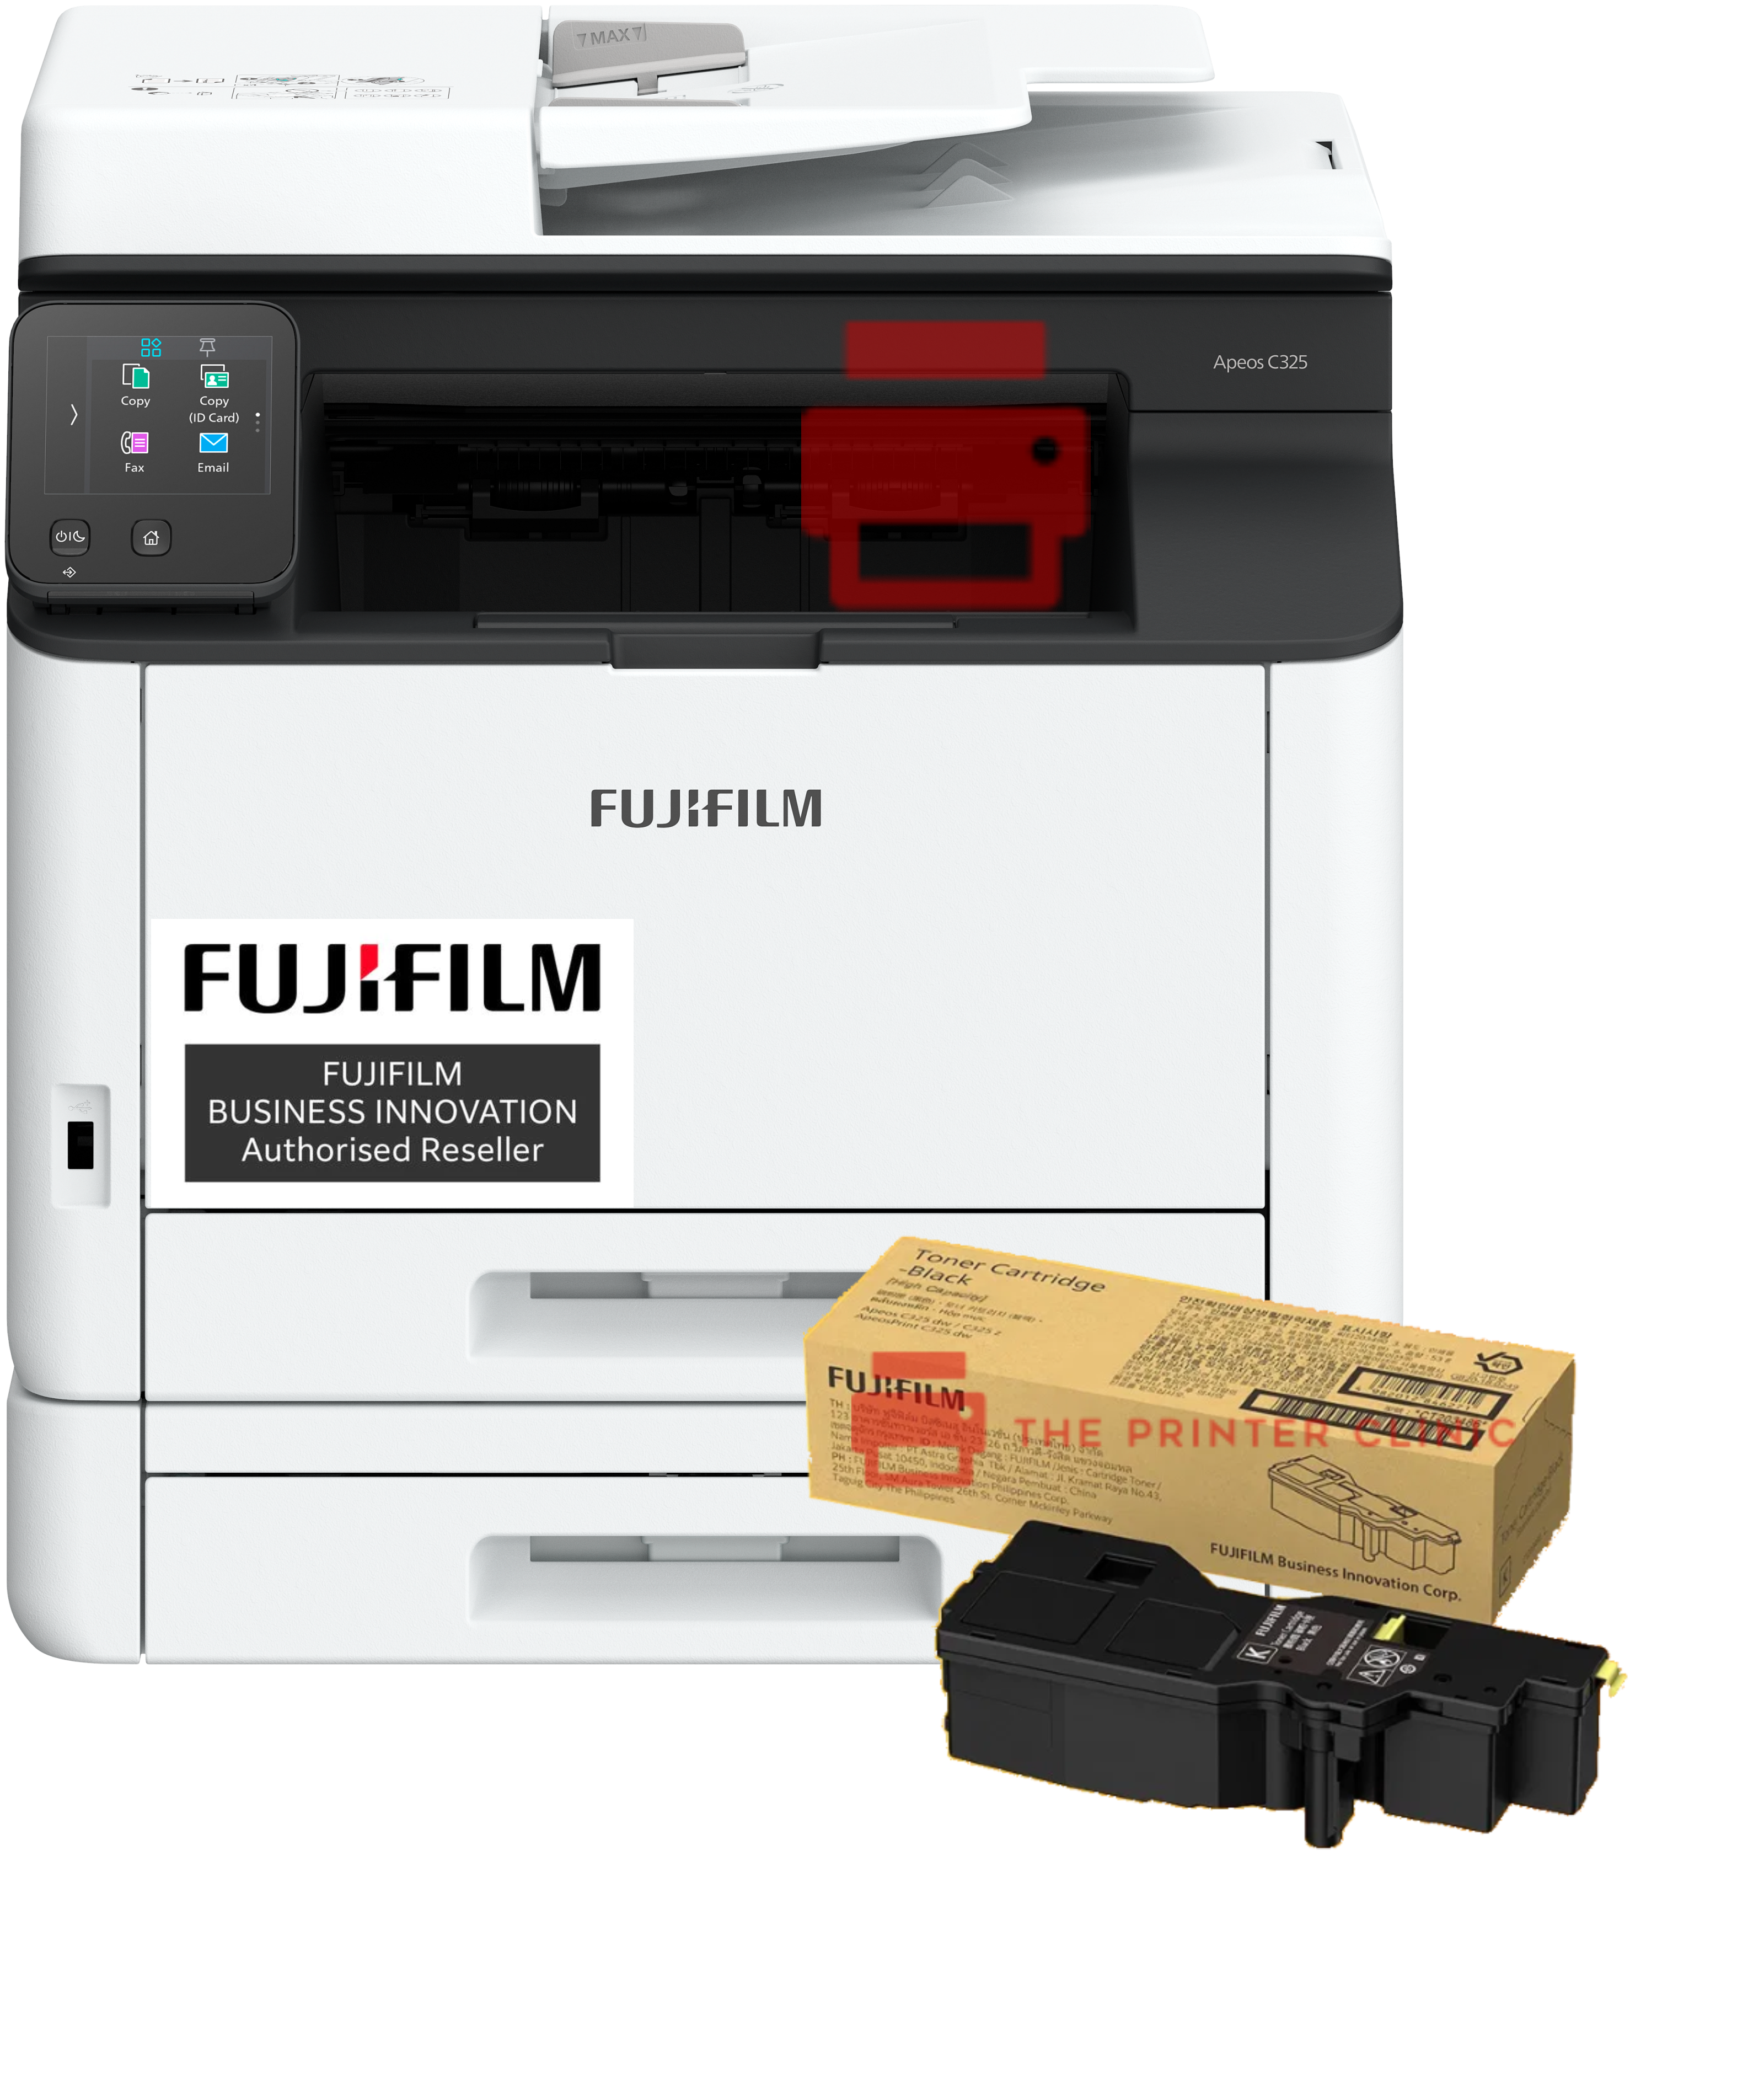 FUJIFILM Apeos C325zt Wireless A4 Colour Multifunction Printer with 2nd 250 Sheet Feeder + Bonus 6k Blk Toner